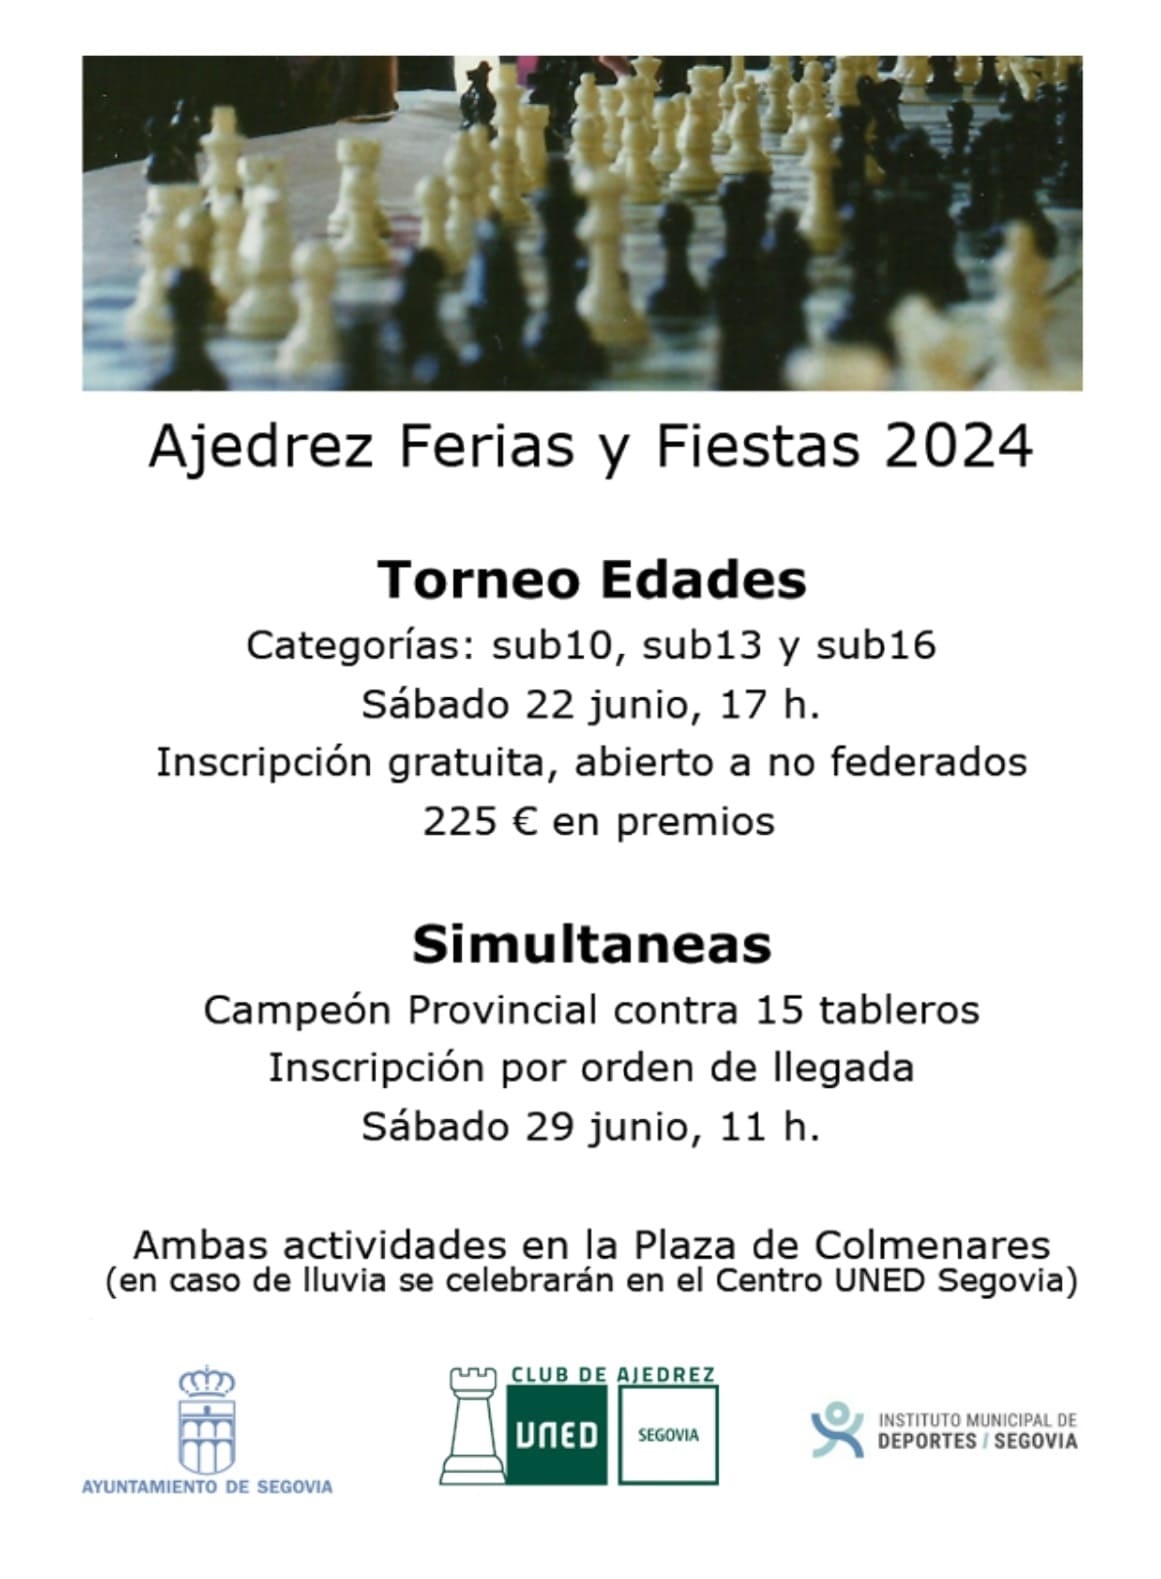 Ferias y Fiestas 2024: Ajedrez